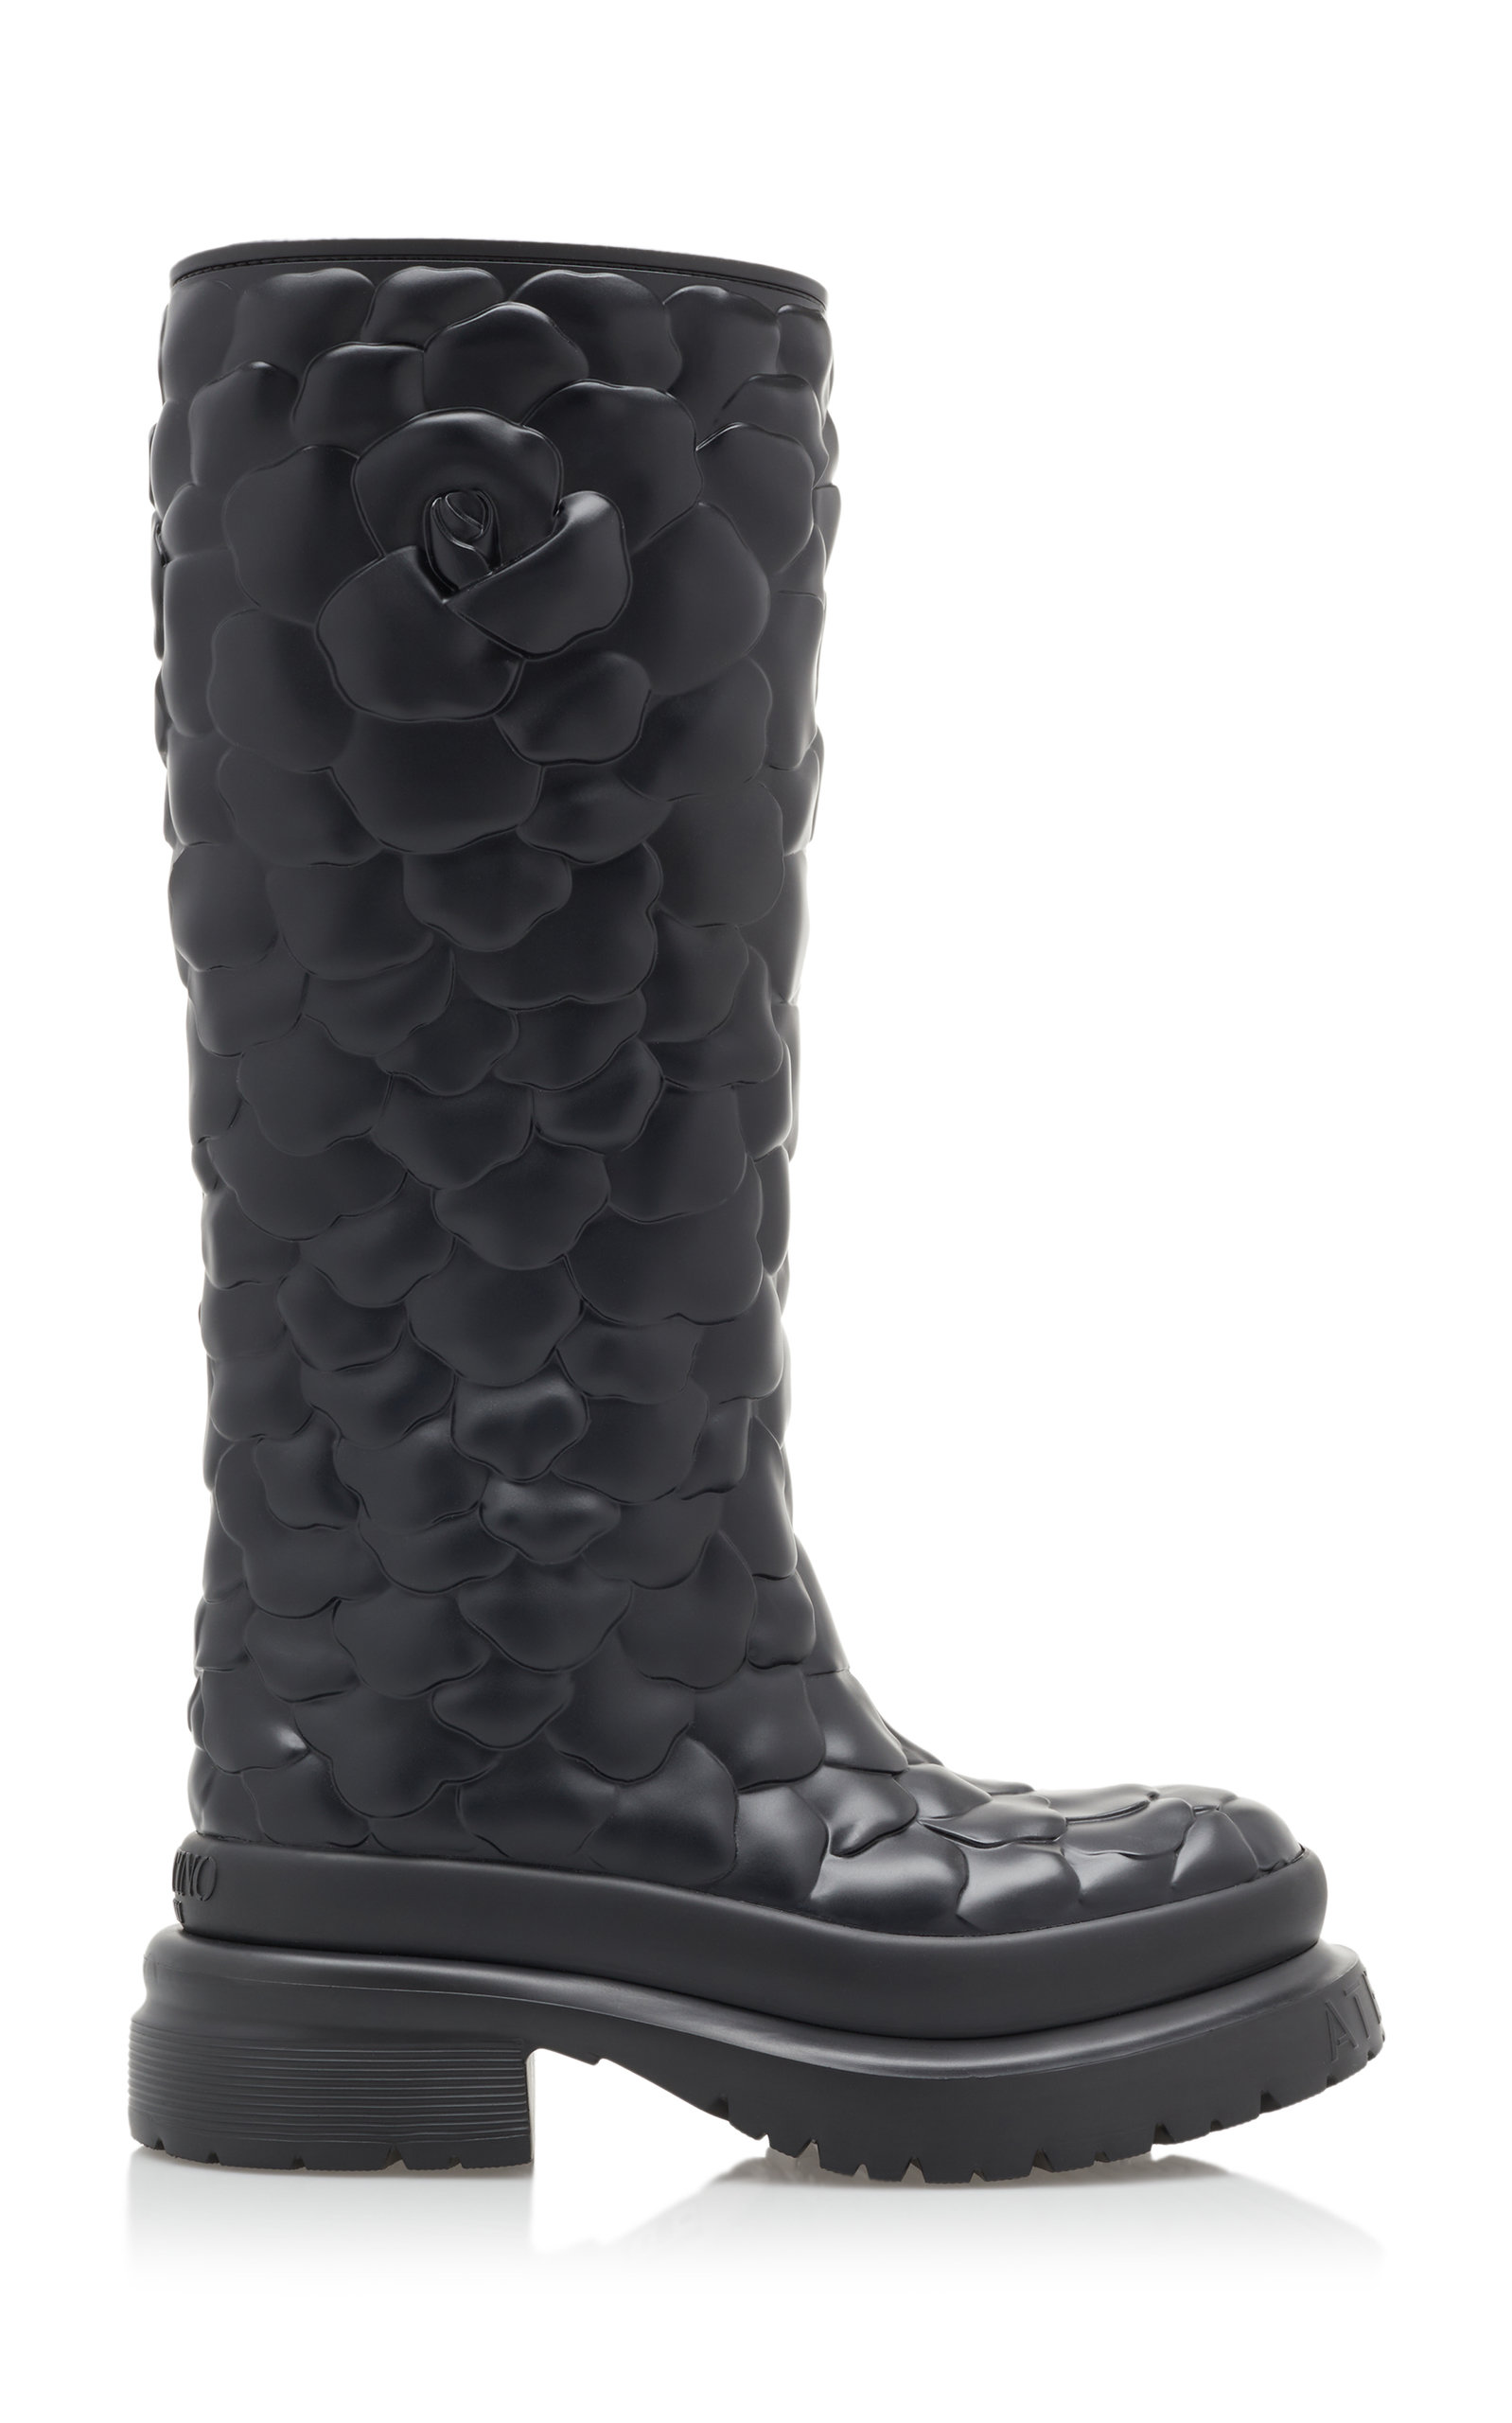 Valentino - Women's Valentino Garavani Rose Atelier Leather Boots - Black/white - Moda Operandi